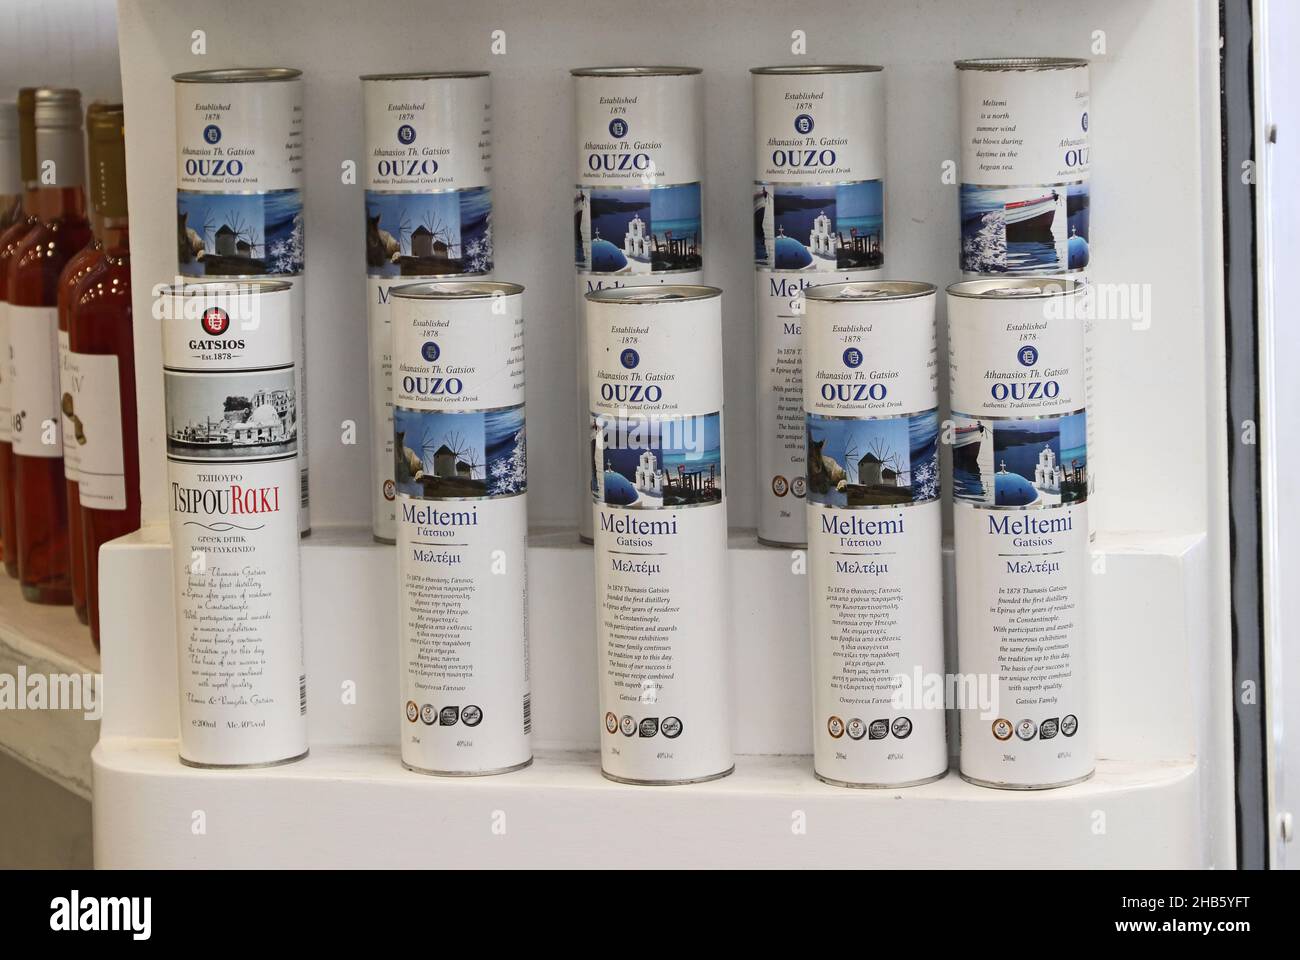 Packaged bottles of Ouzo and Tsipou Rali produced by Thanasis Gatsios on sale, Fira, Santorini, Greece Stock Photo